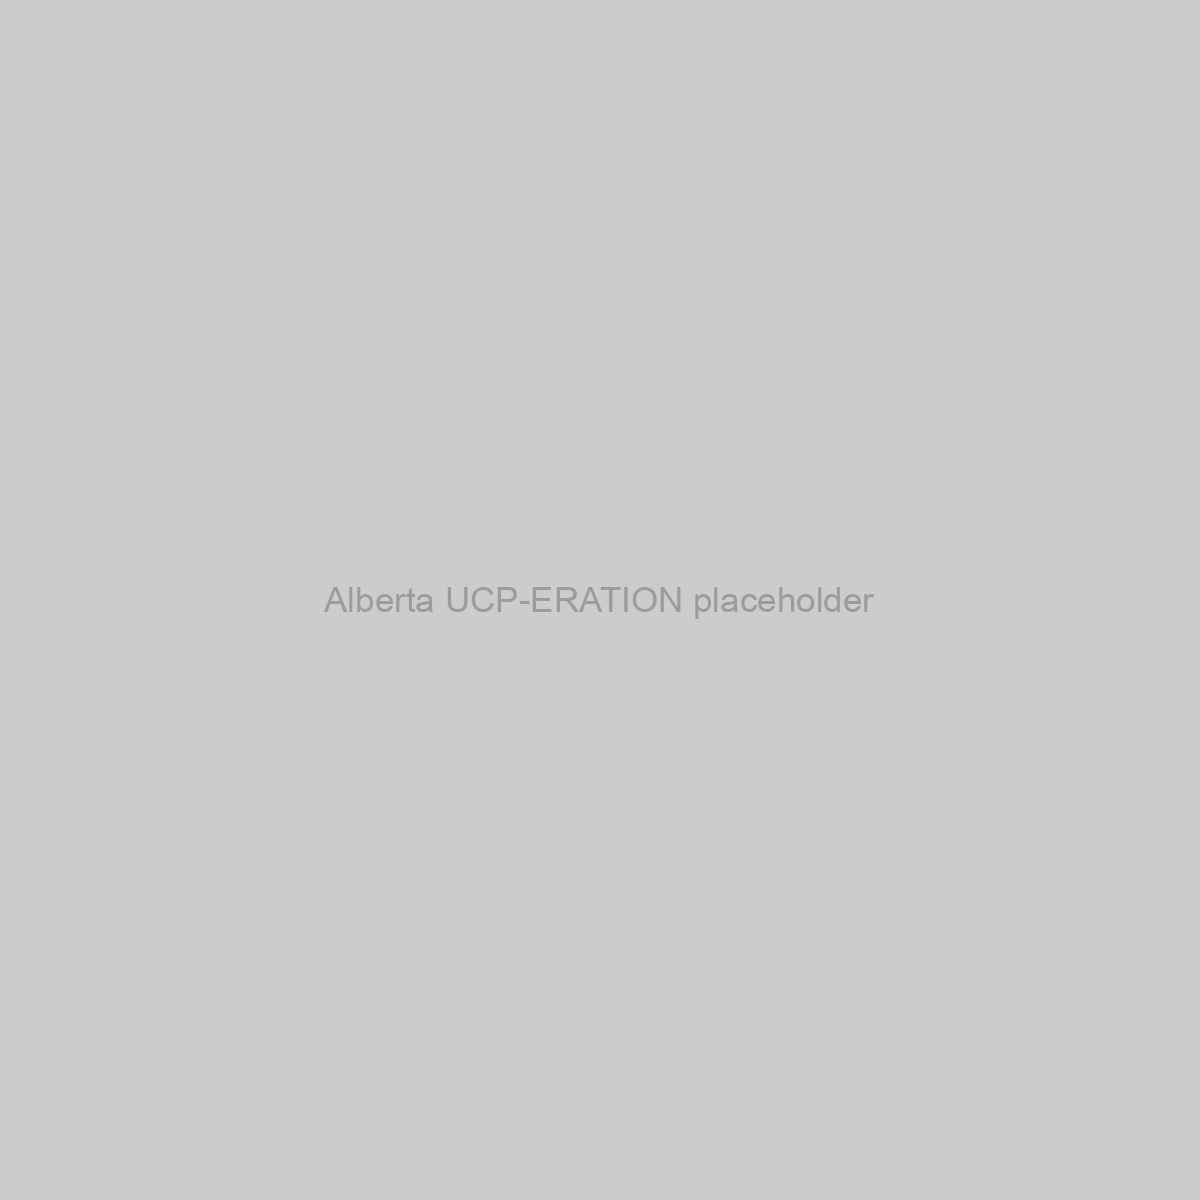 Alberta UCP-ERATION Placeholder Image